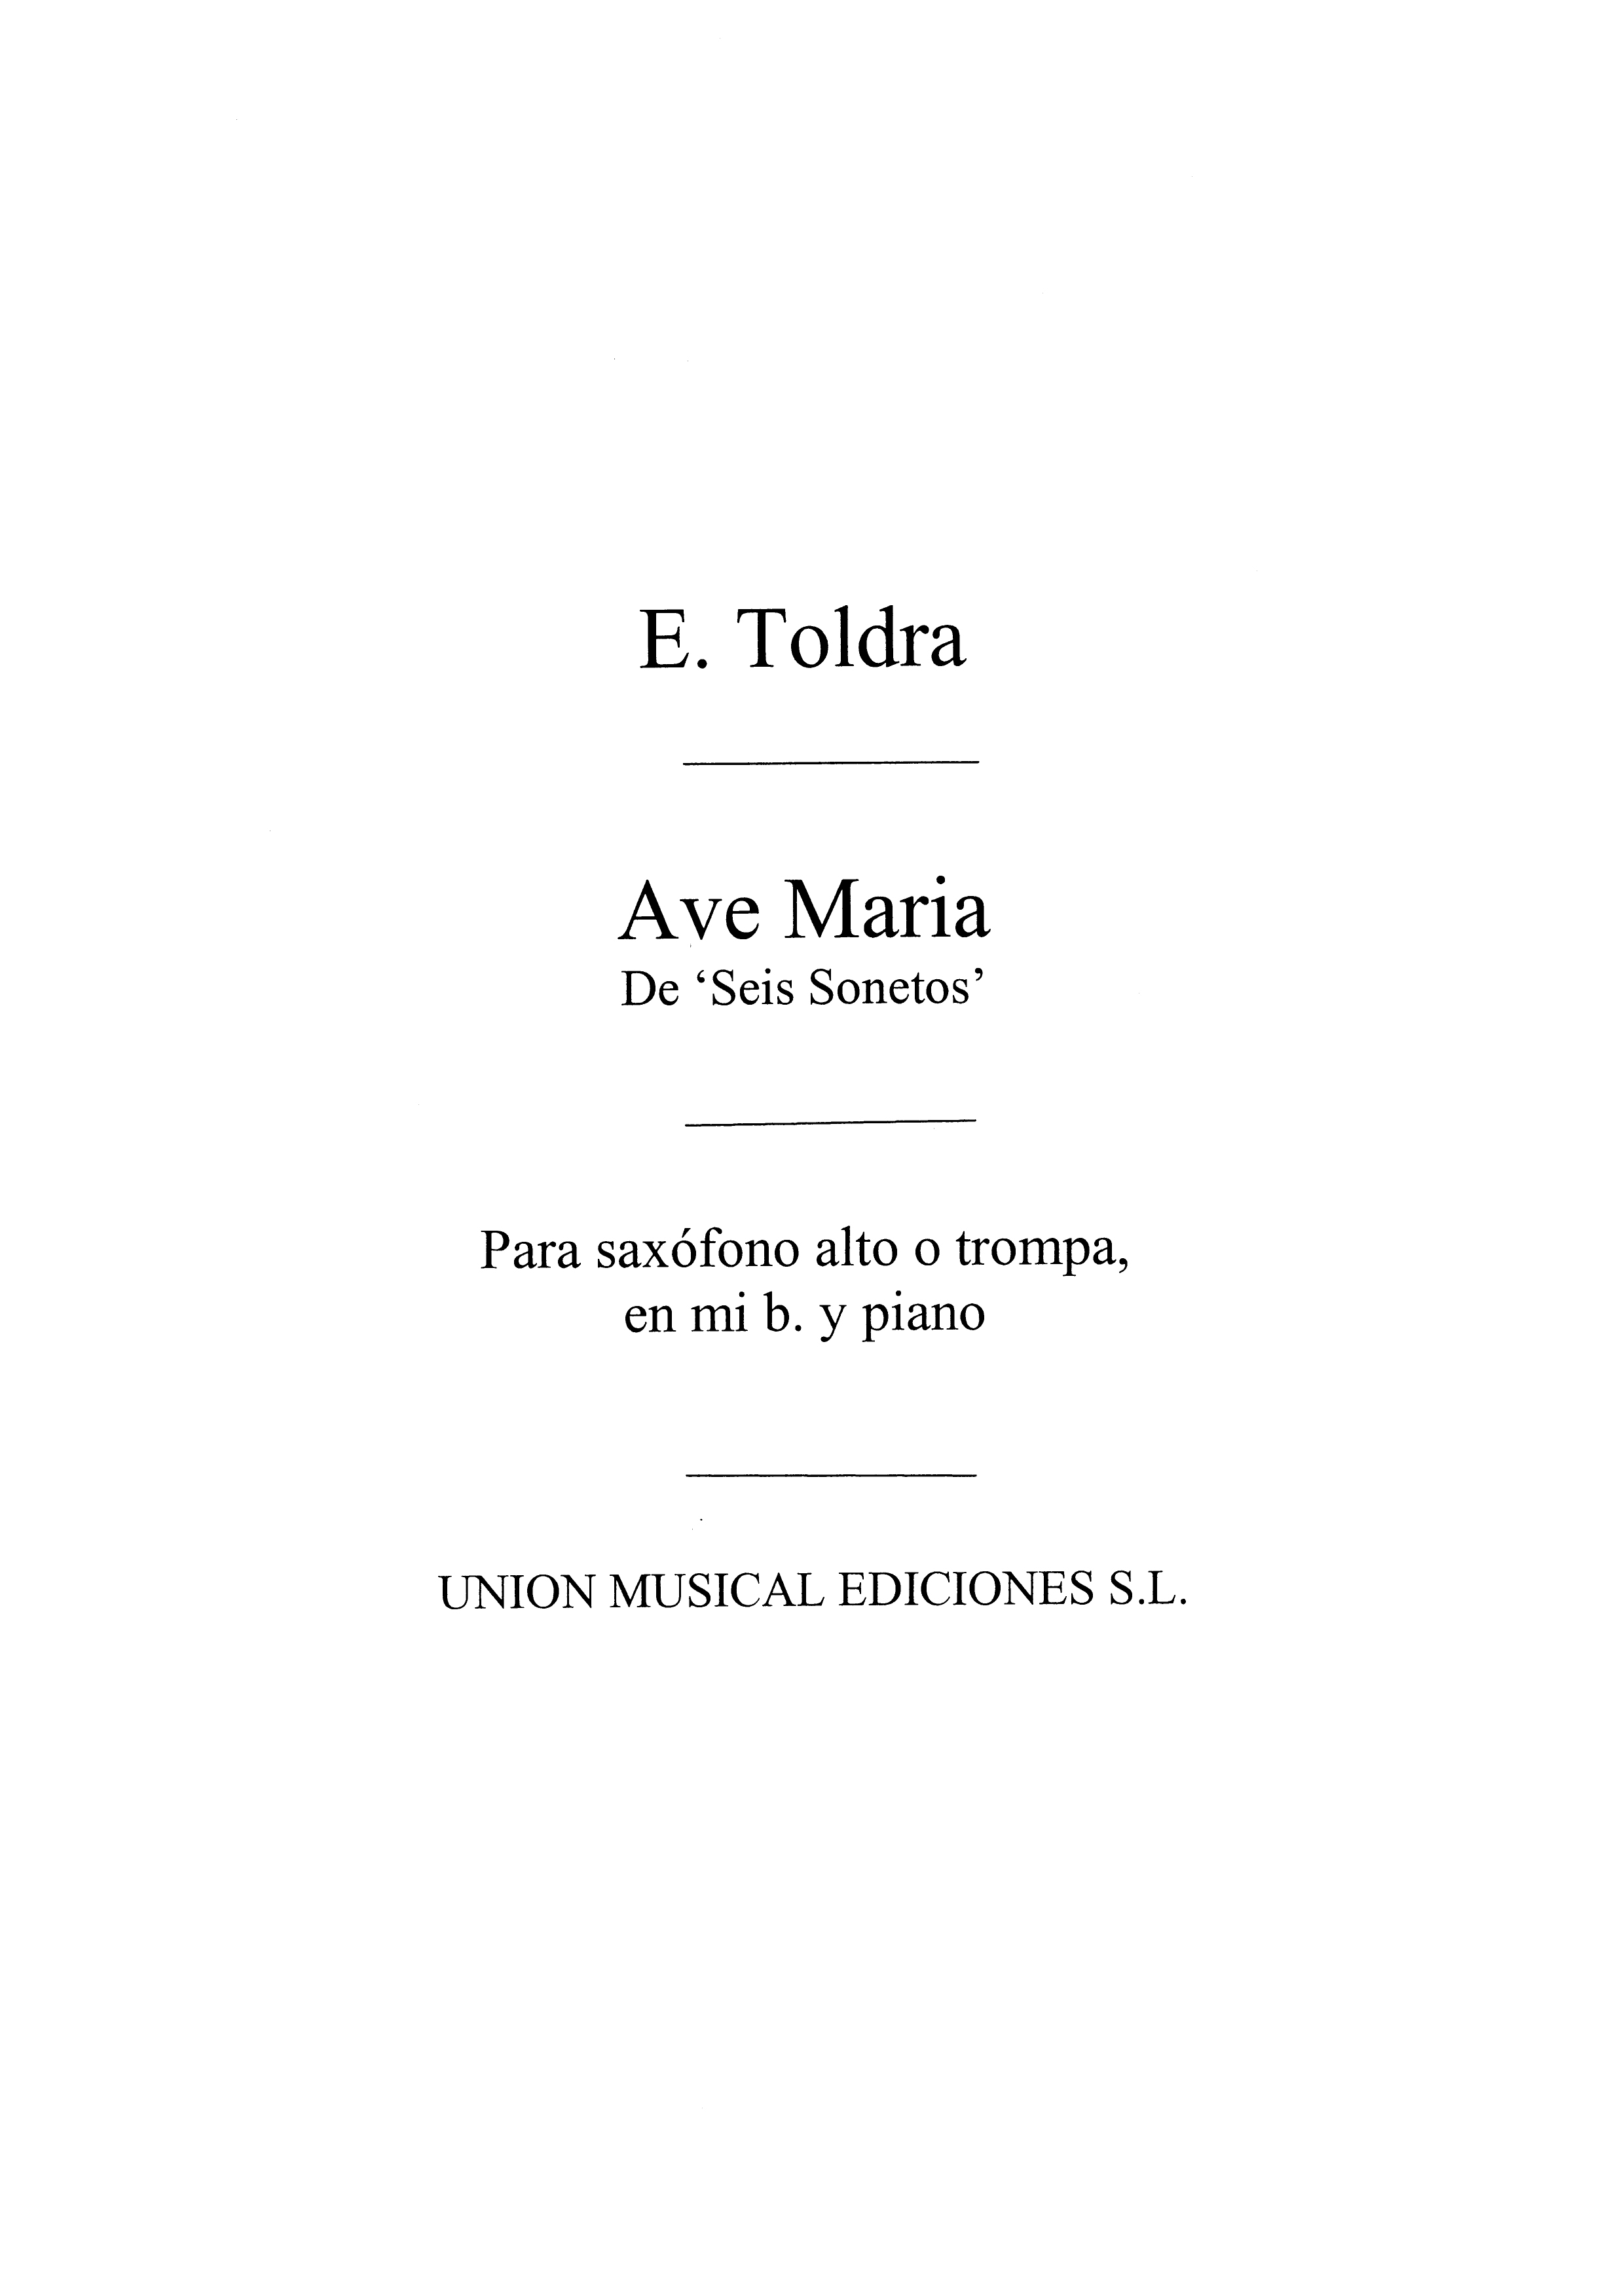 Toldra: Ave Maria (Bayer) for Alto Saxophone